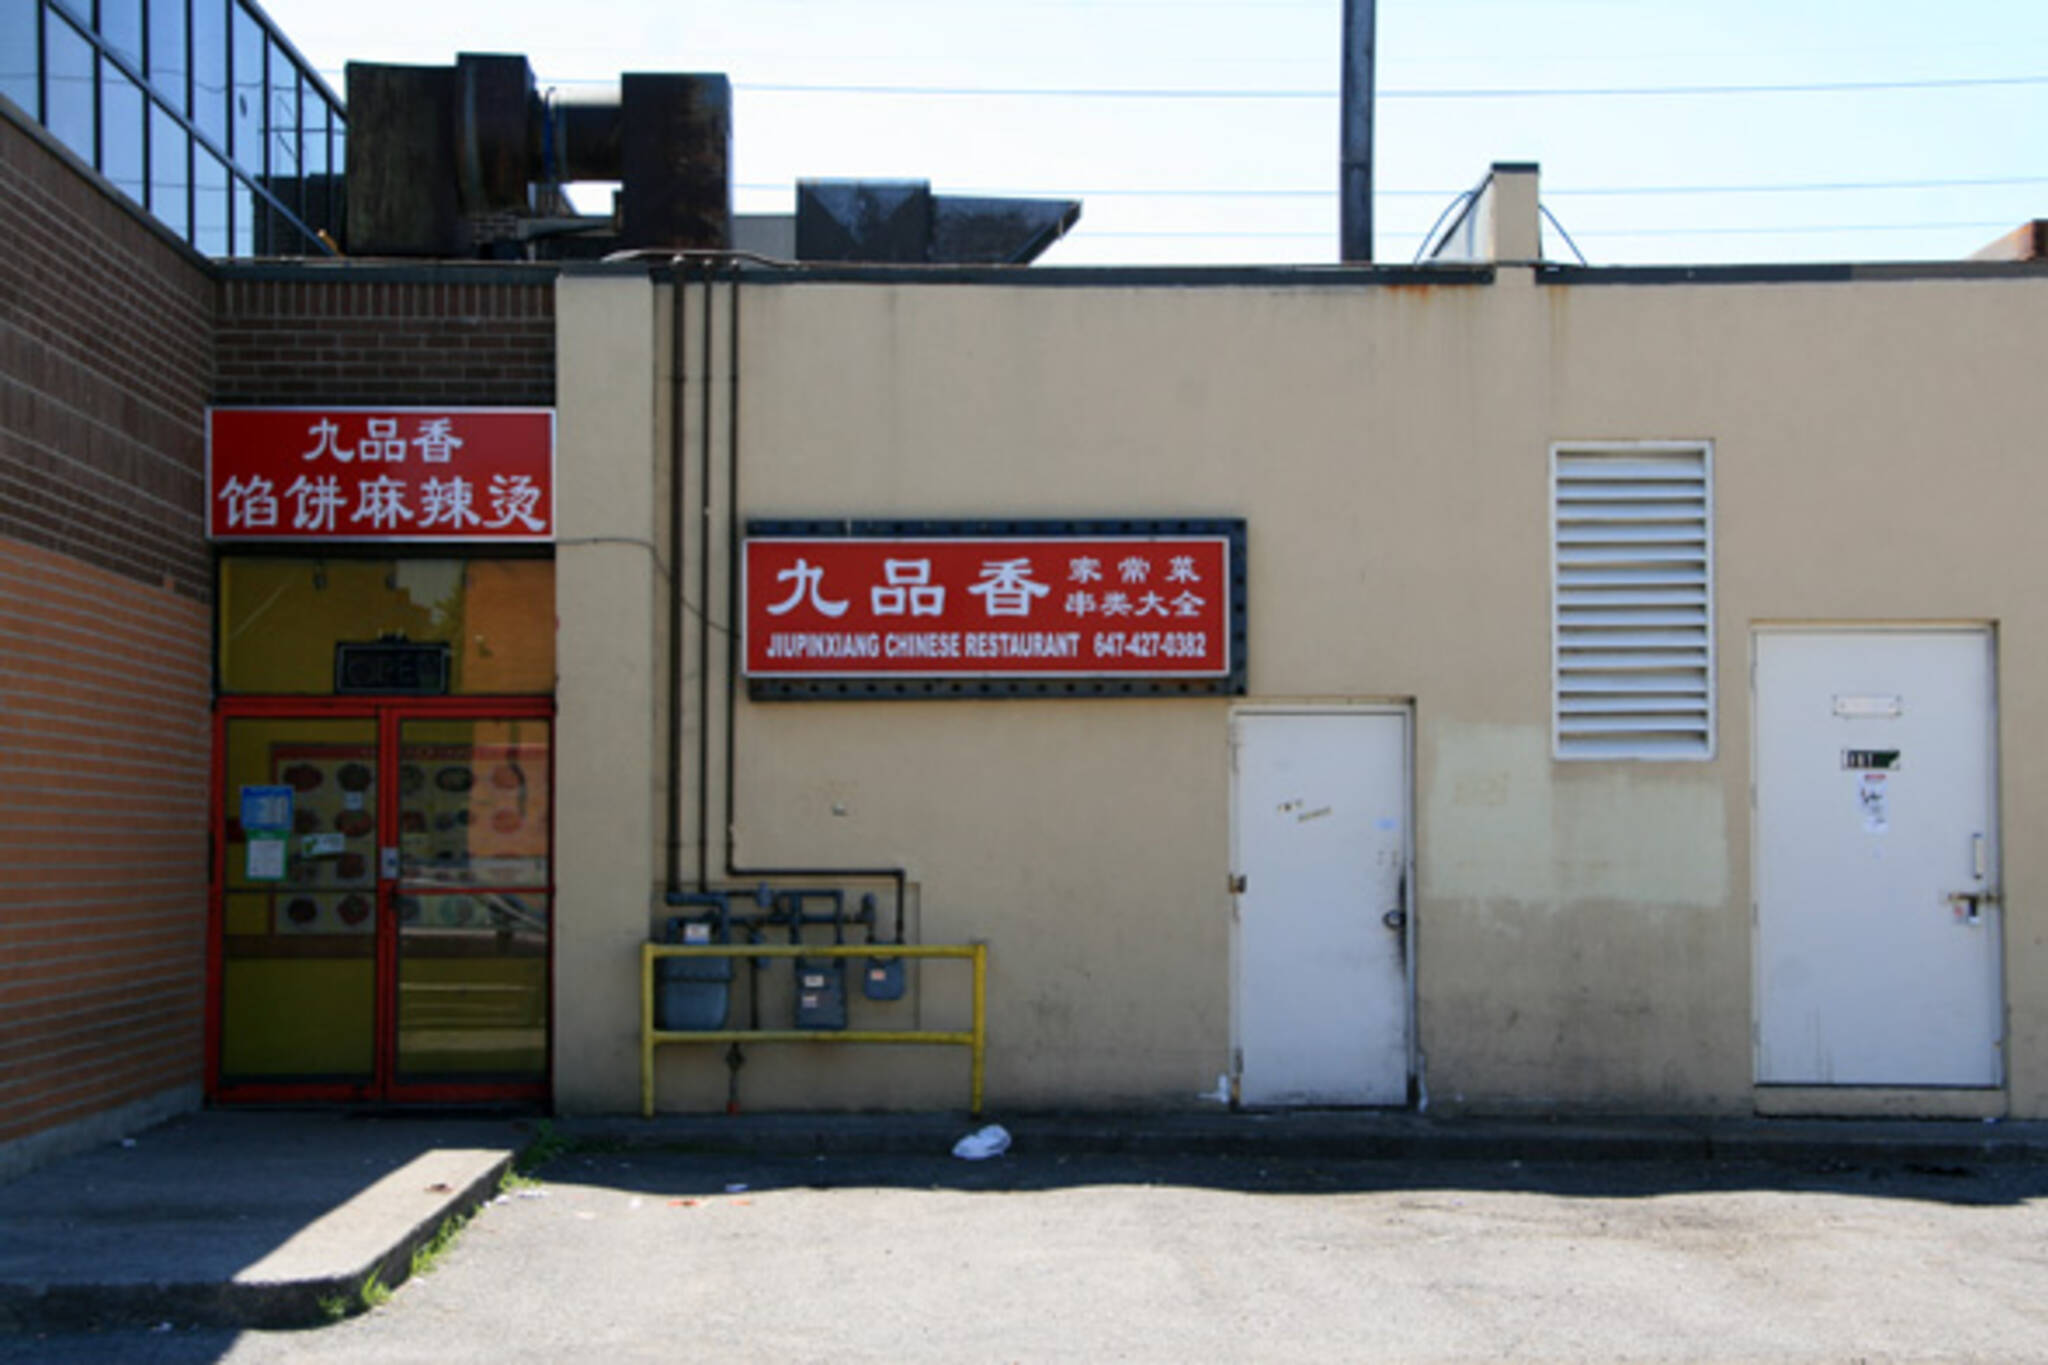 Jiupinxiang Chinese Restaurant